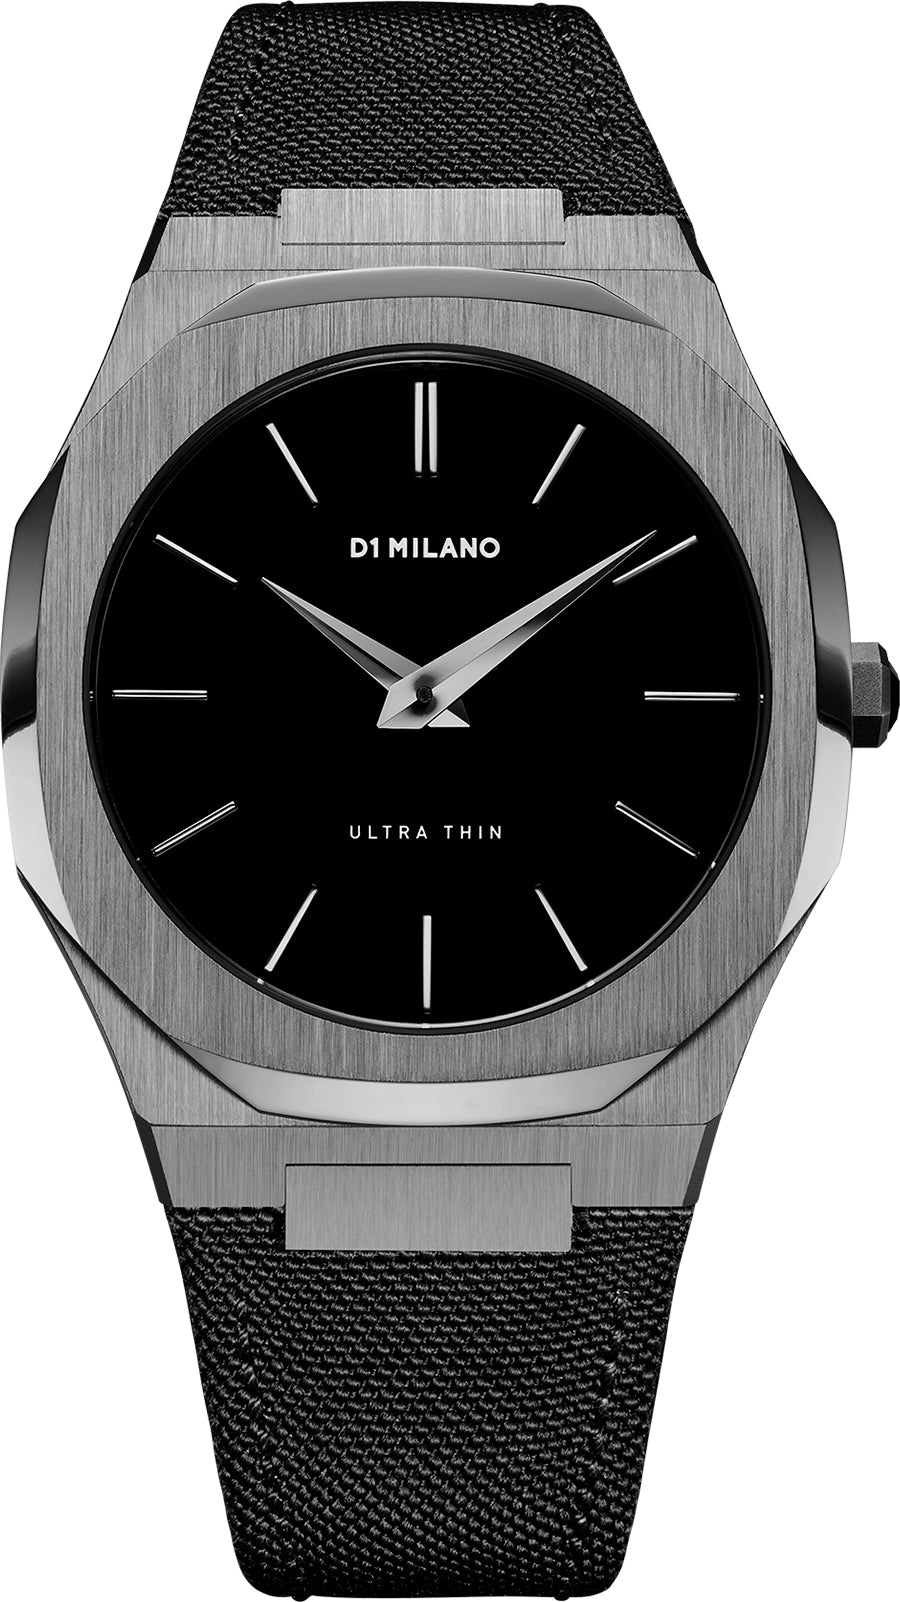 Photos - Wrist Watch D1 Milano Watch Ultra Thin - Black DLM-049 